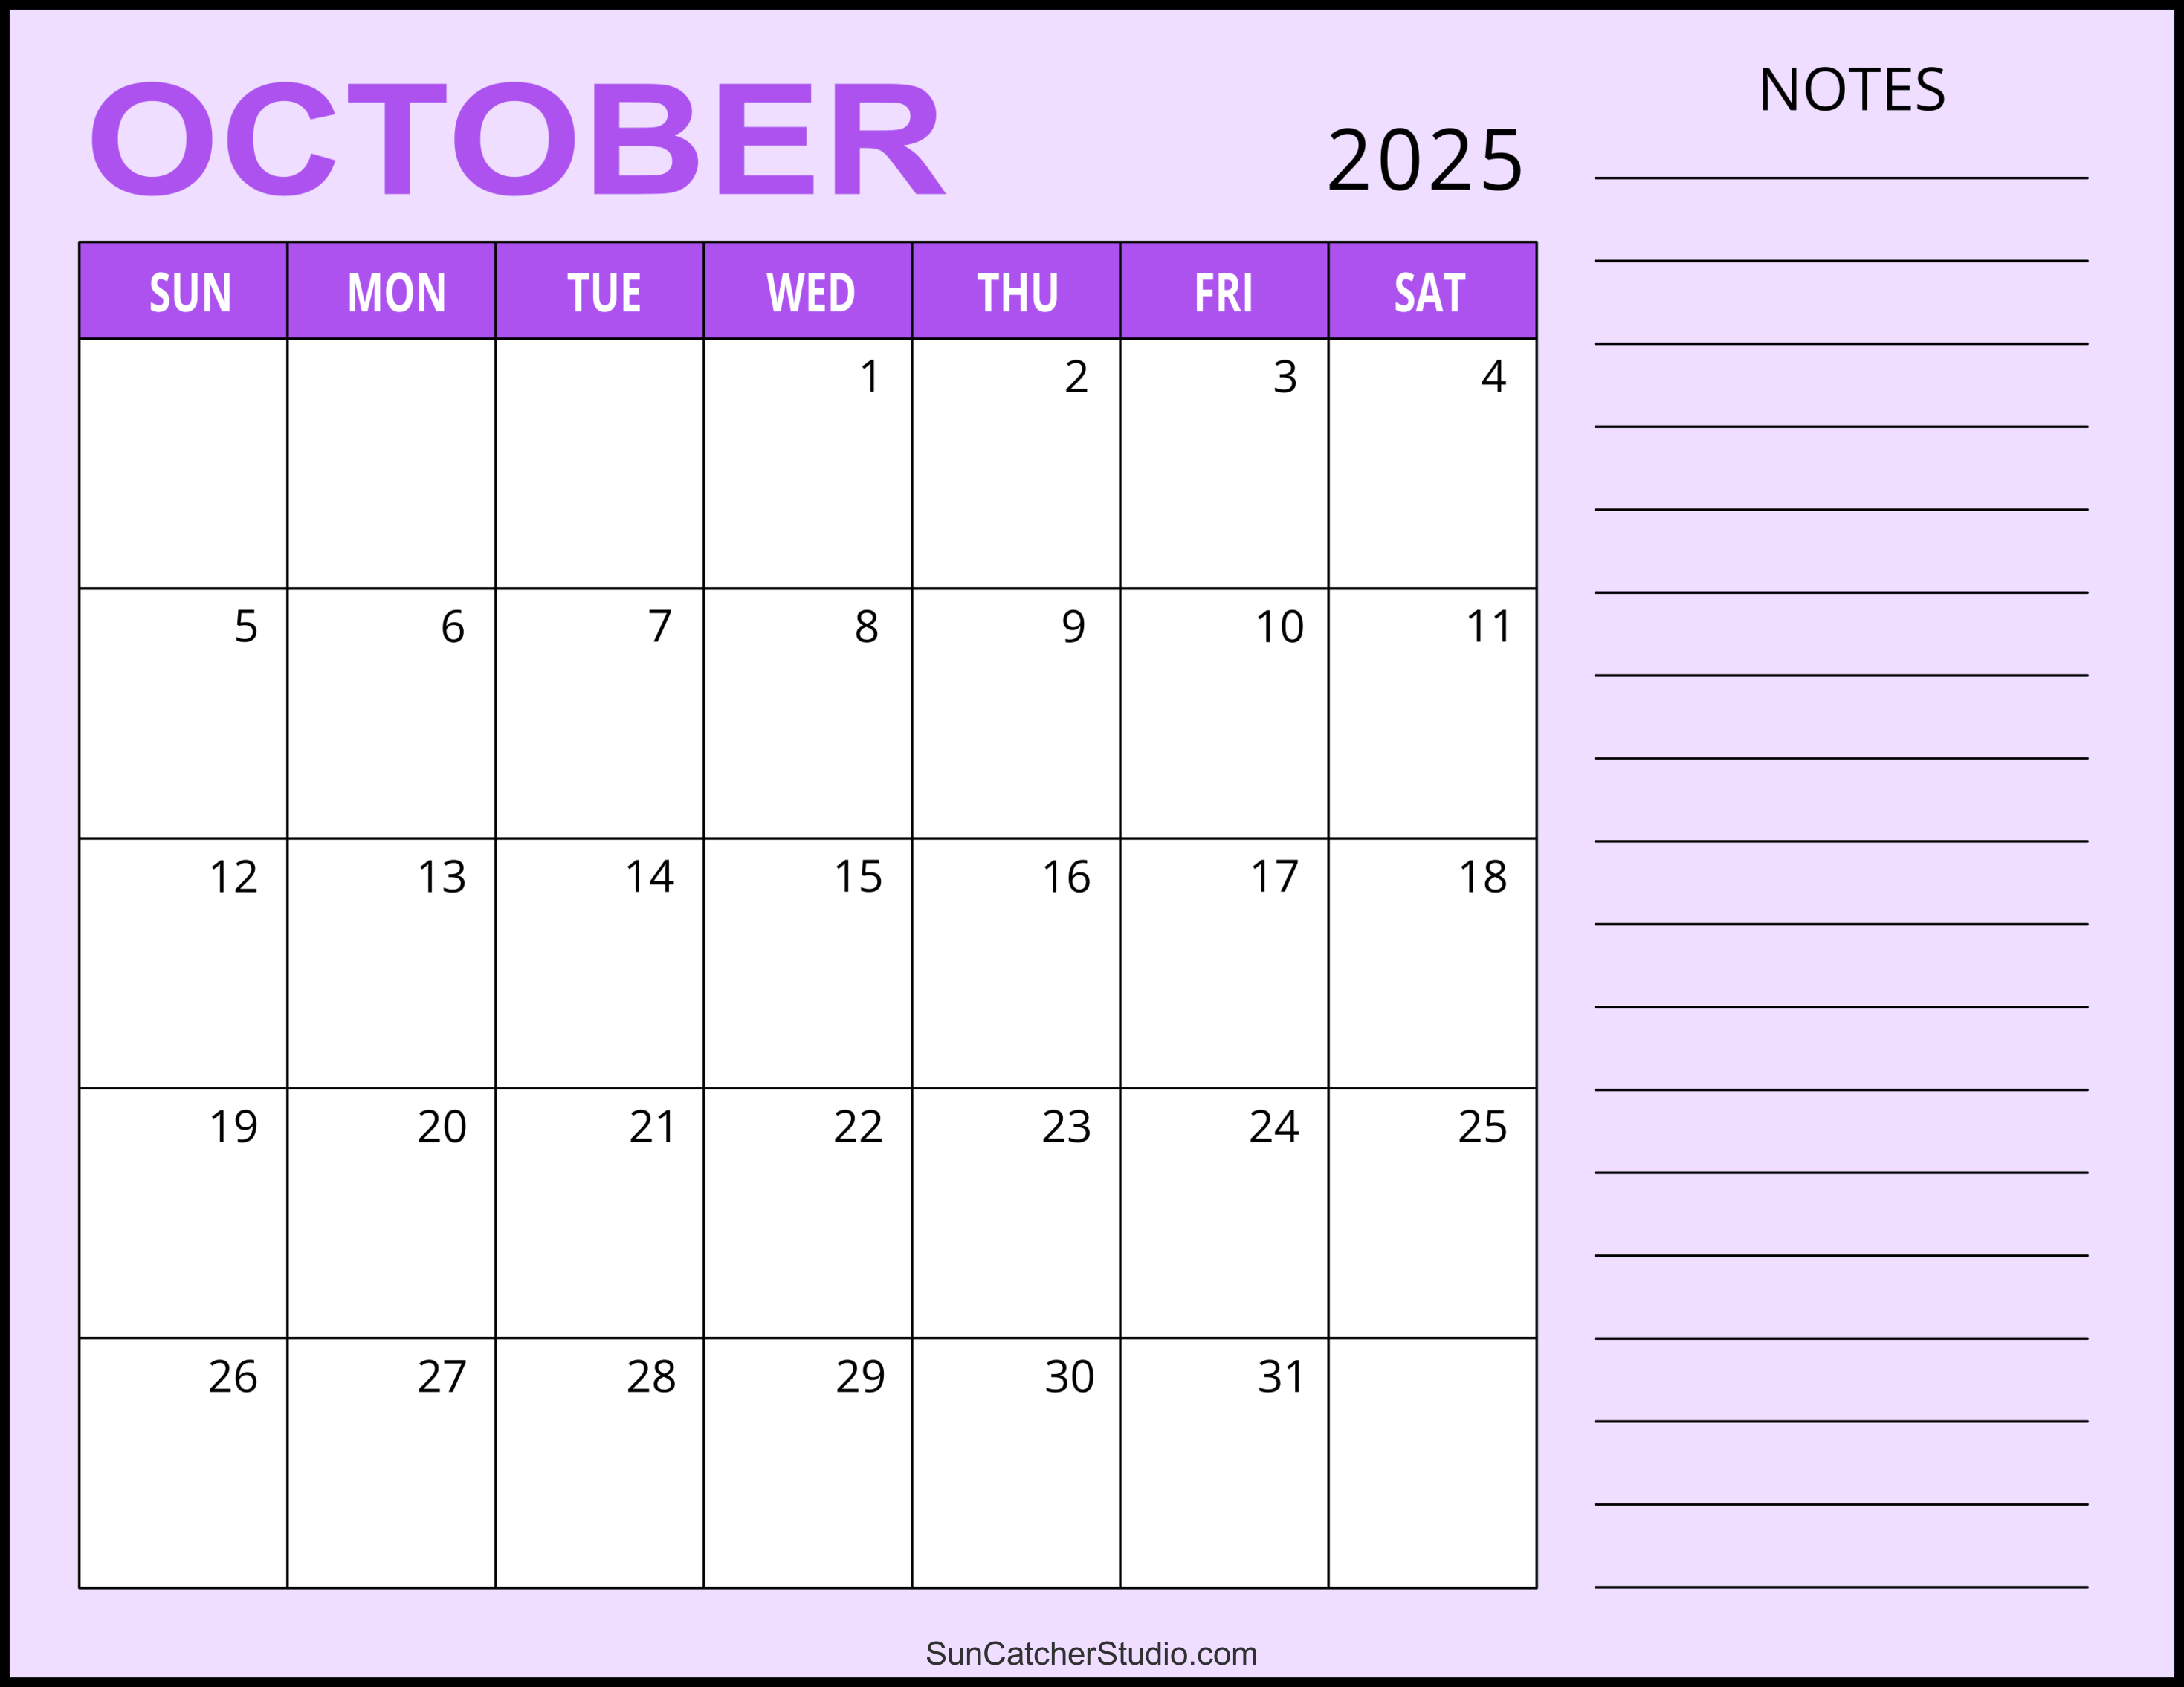 october-2025-calendar-free-printable-diy-projects-patterns-monograms-designs-templates